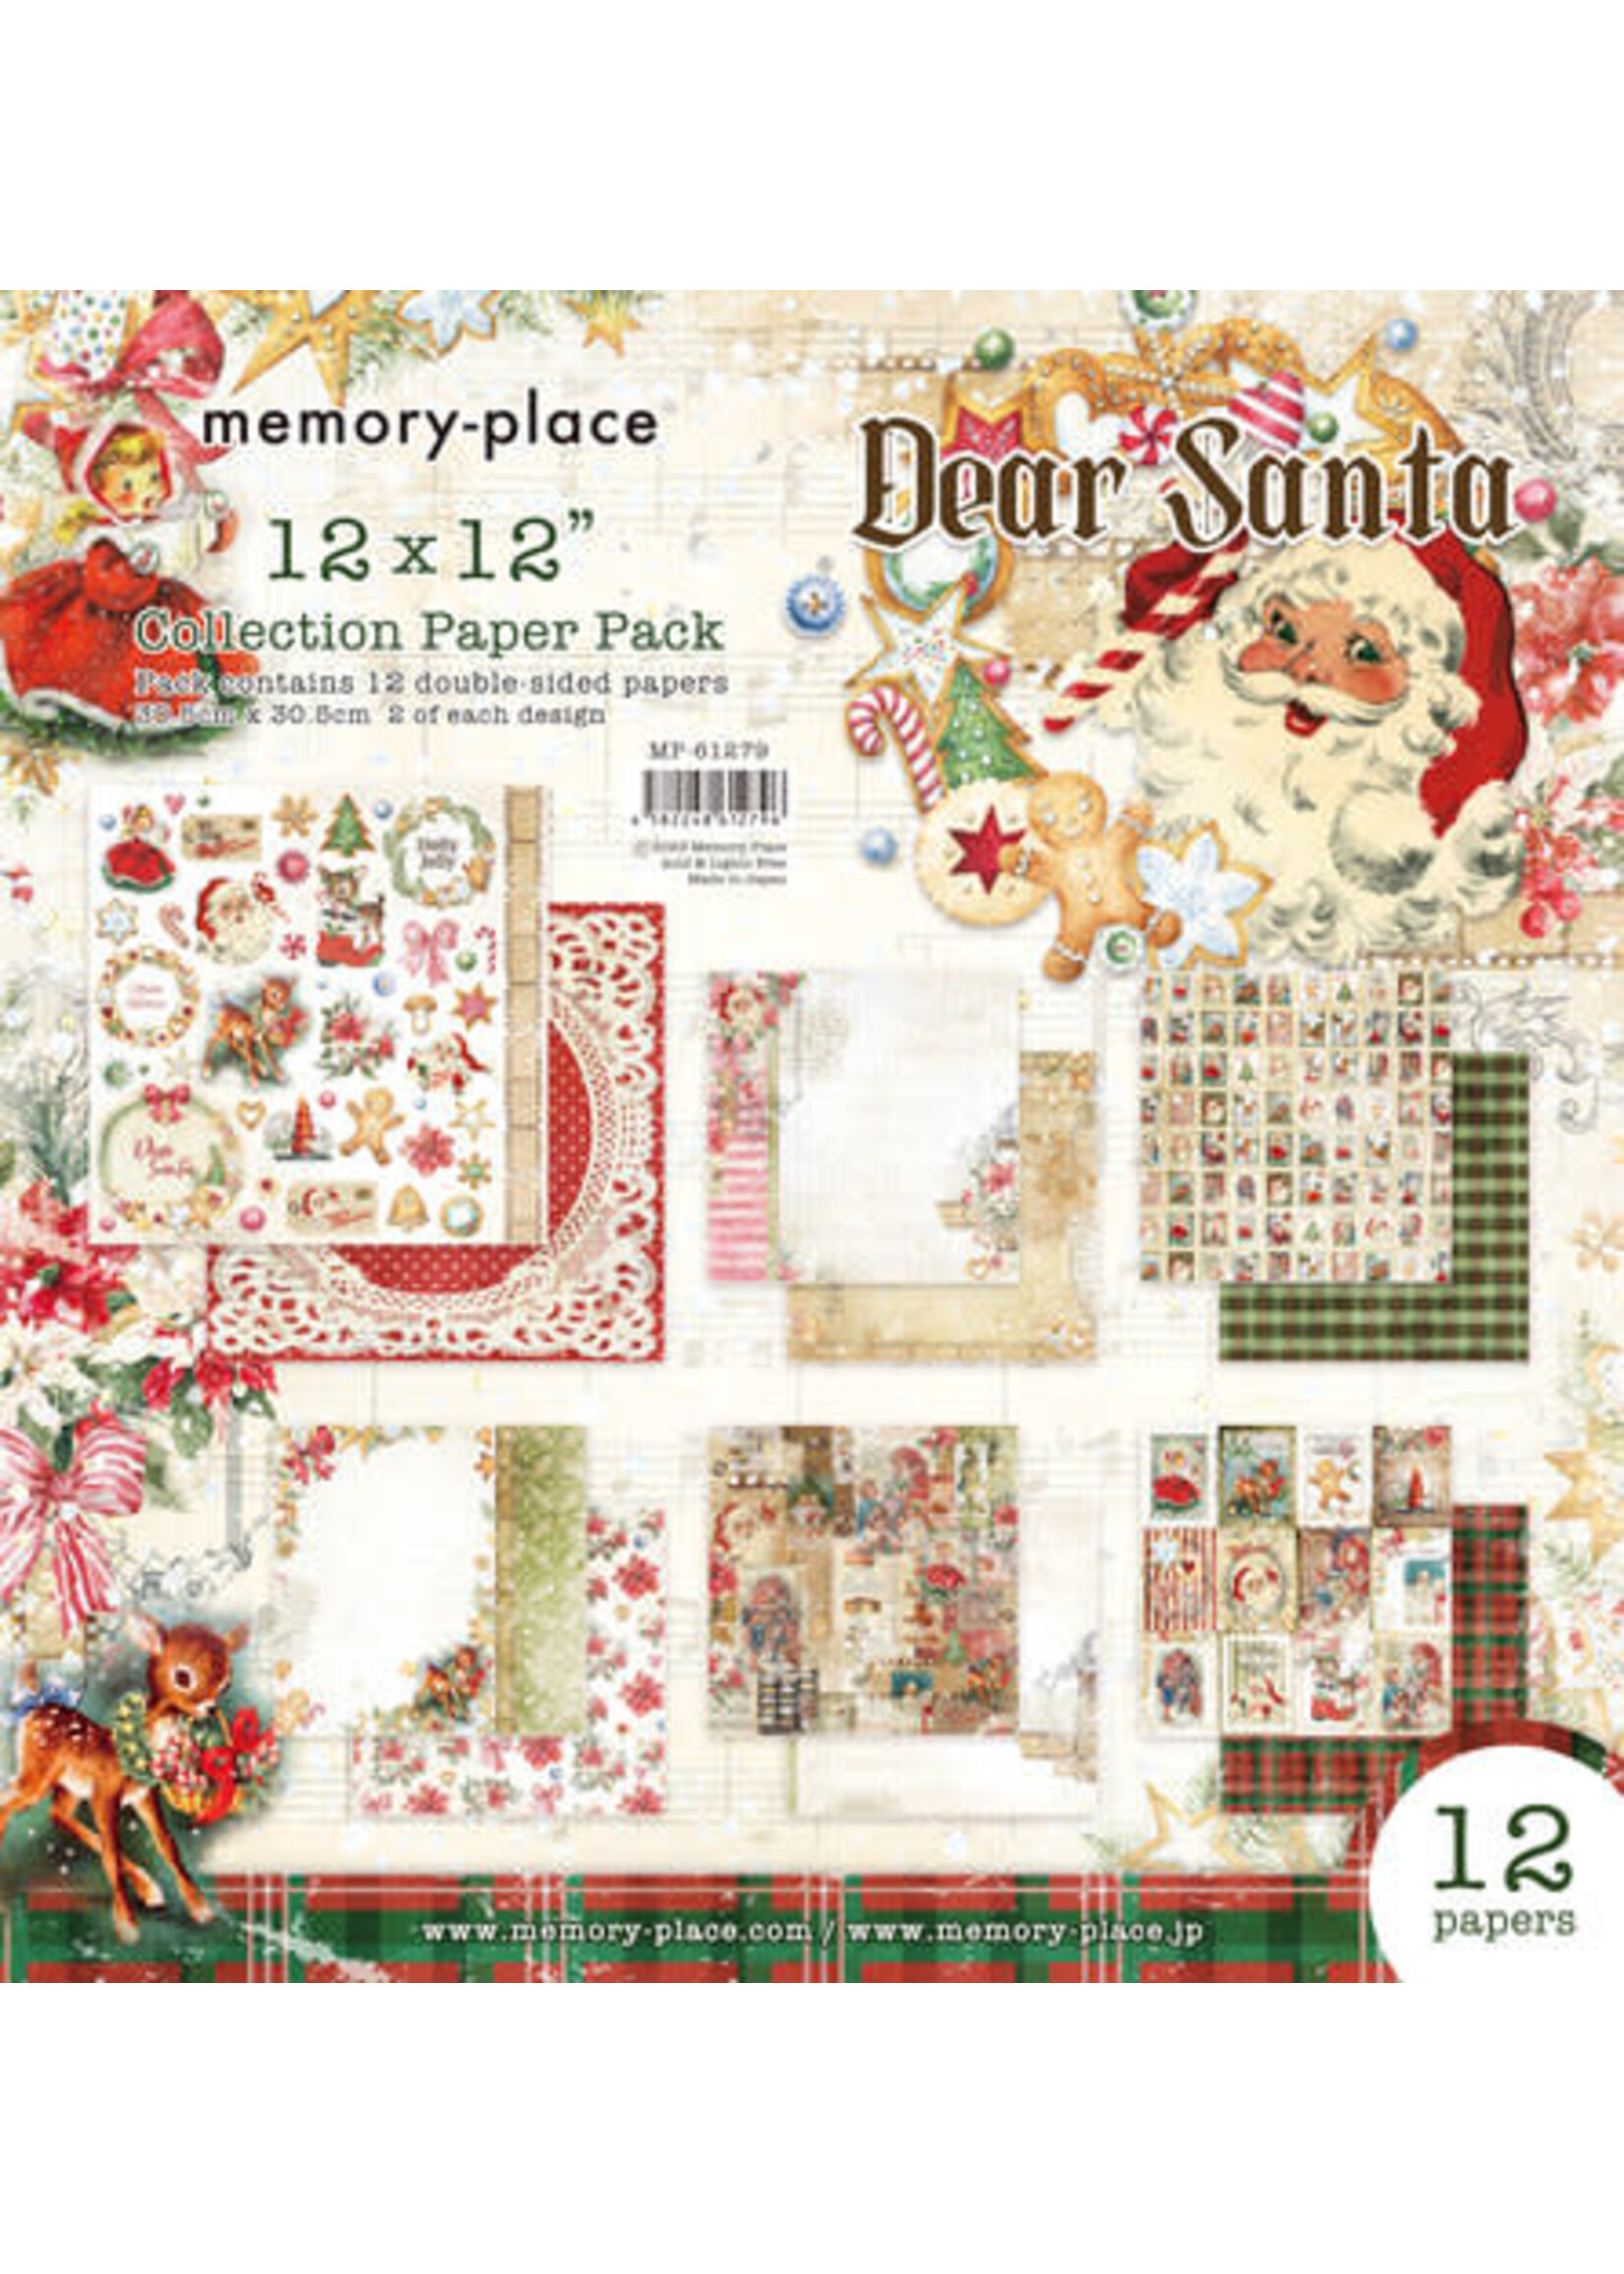 Memory Place Dear Santa 12x12 Inch Paper Pack (MP-61279)